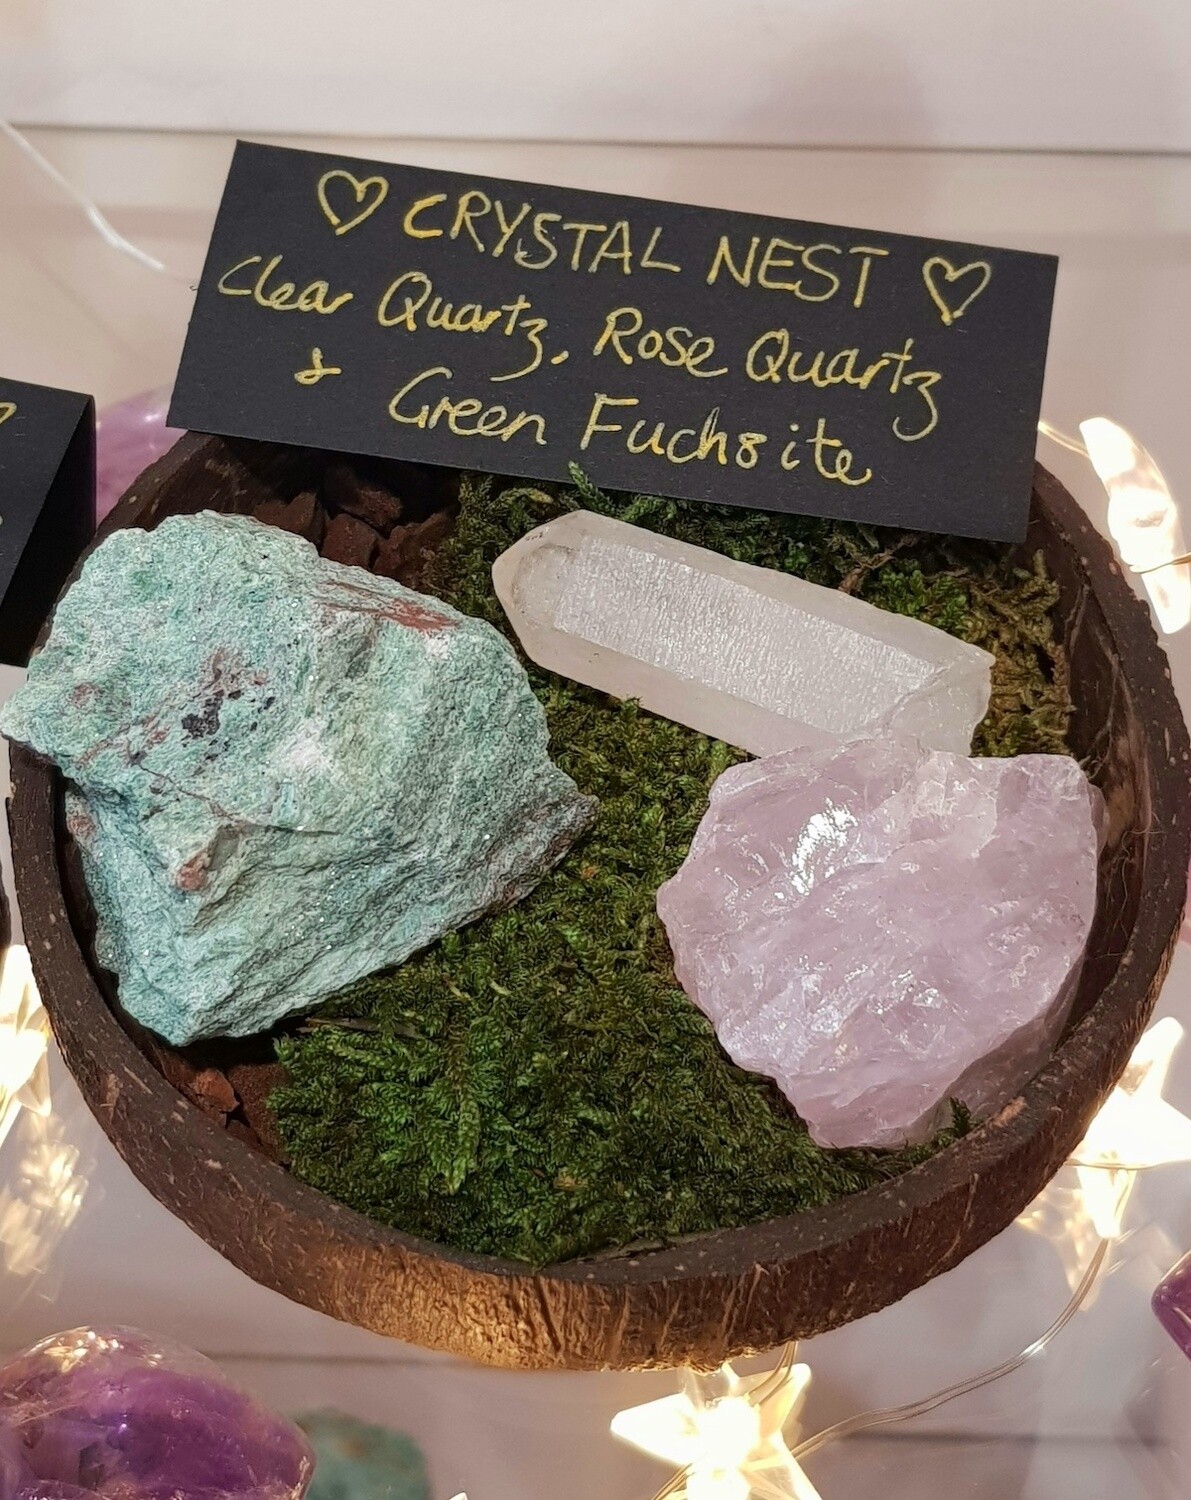 Crystal Nest: Clear Quartz - Rose Quartz - Green Fuchsite